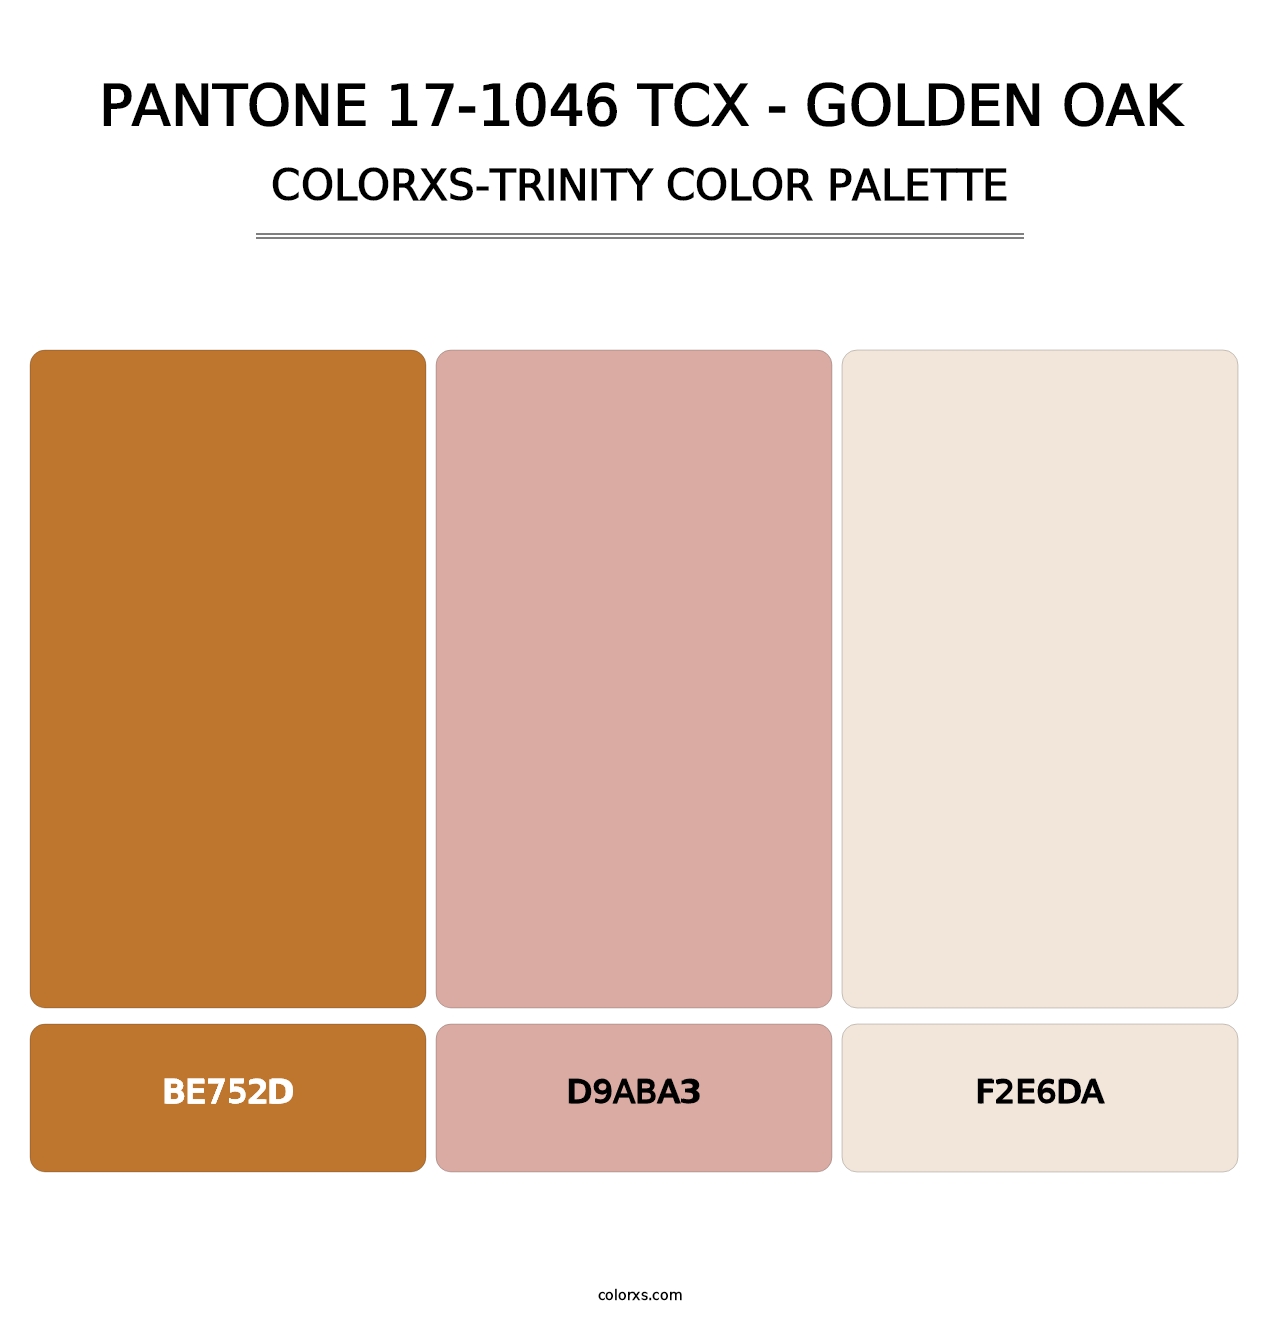 PANTONE 17-1046 TCX - Golden Oak - Colorxs Trinity Palette